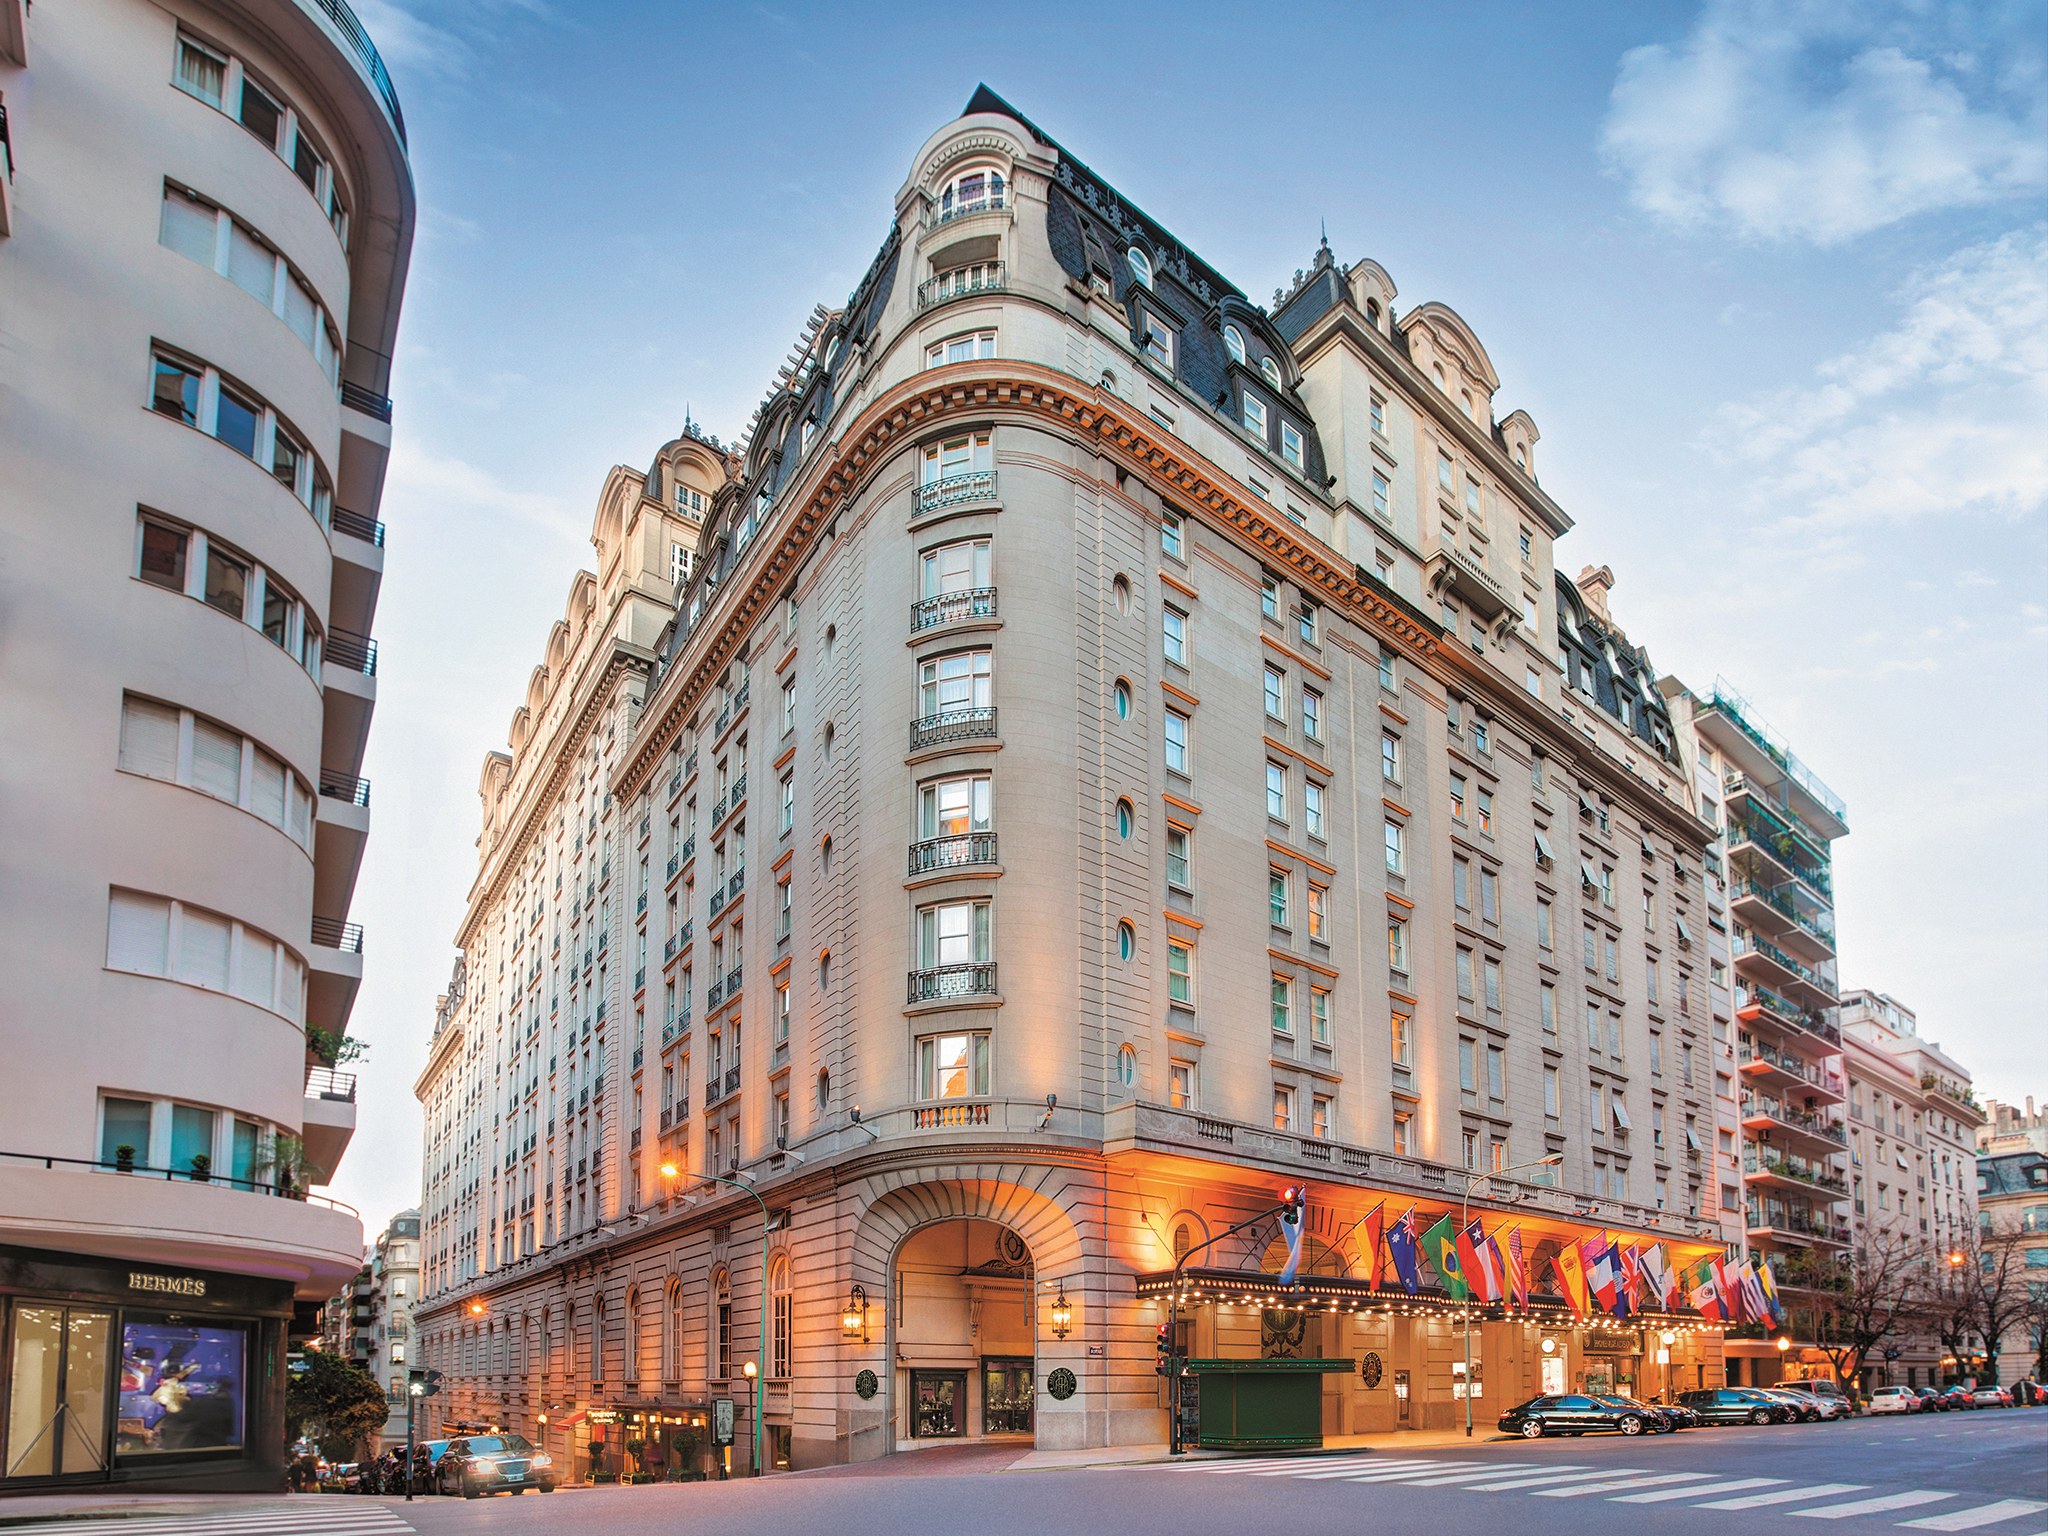 Alvear Palace Hotel Buenos Aires, Argentina - Condé Nast Traveler